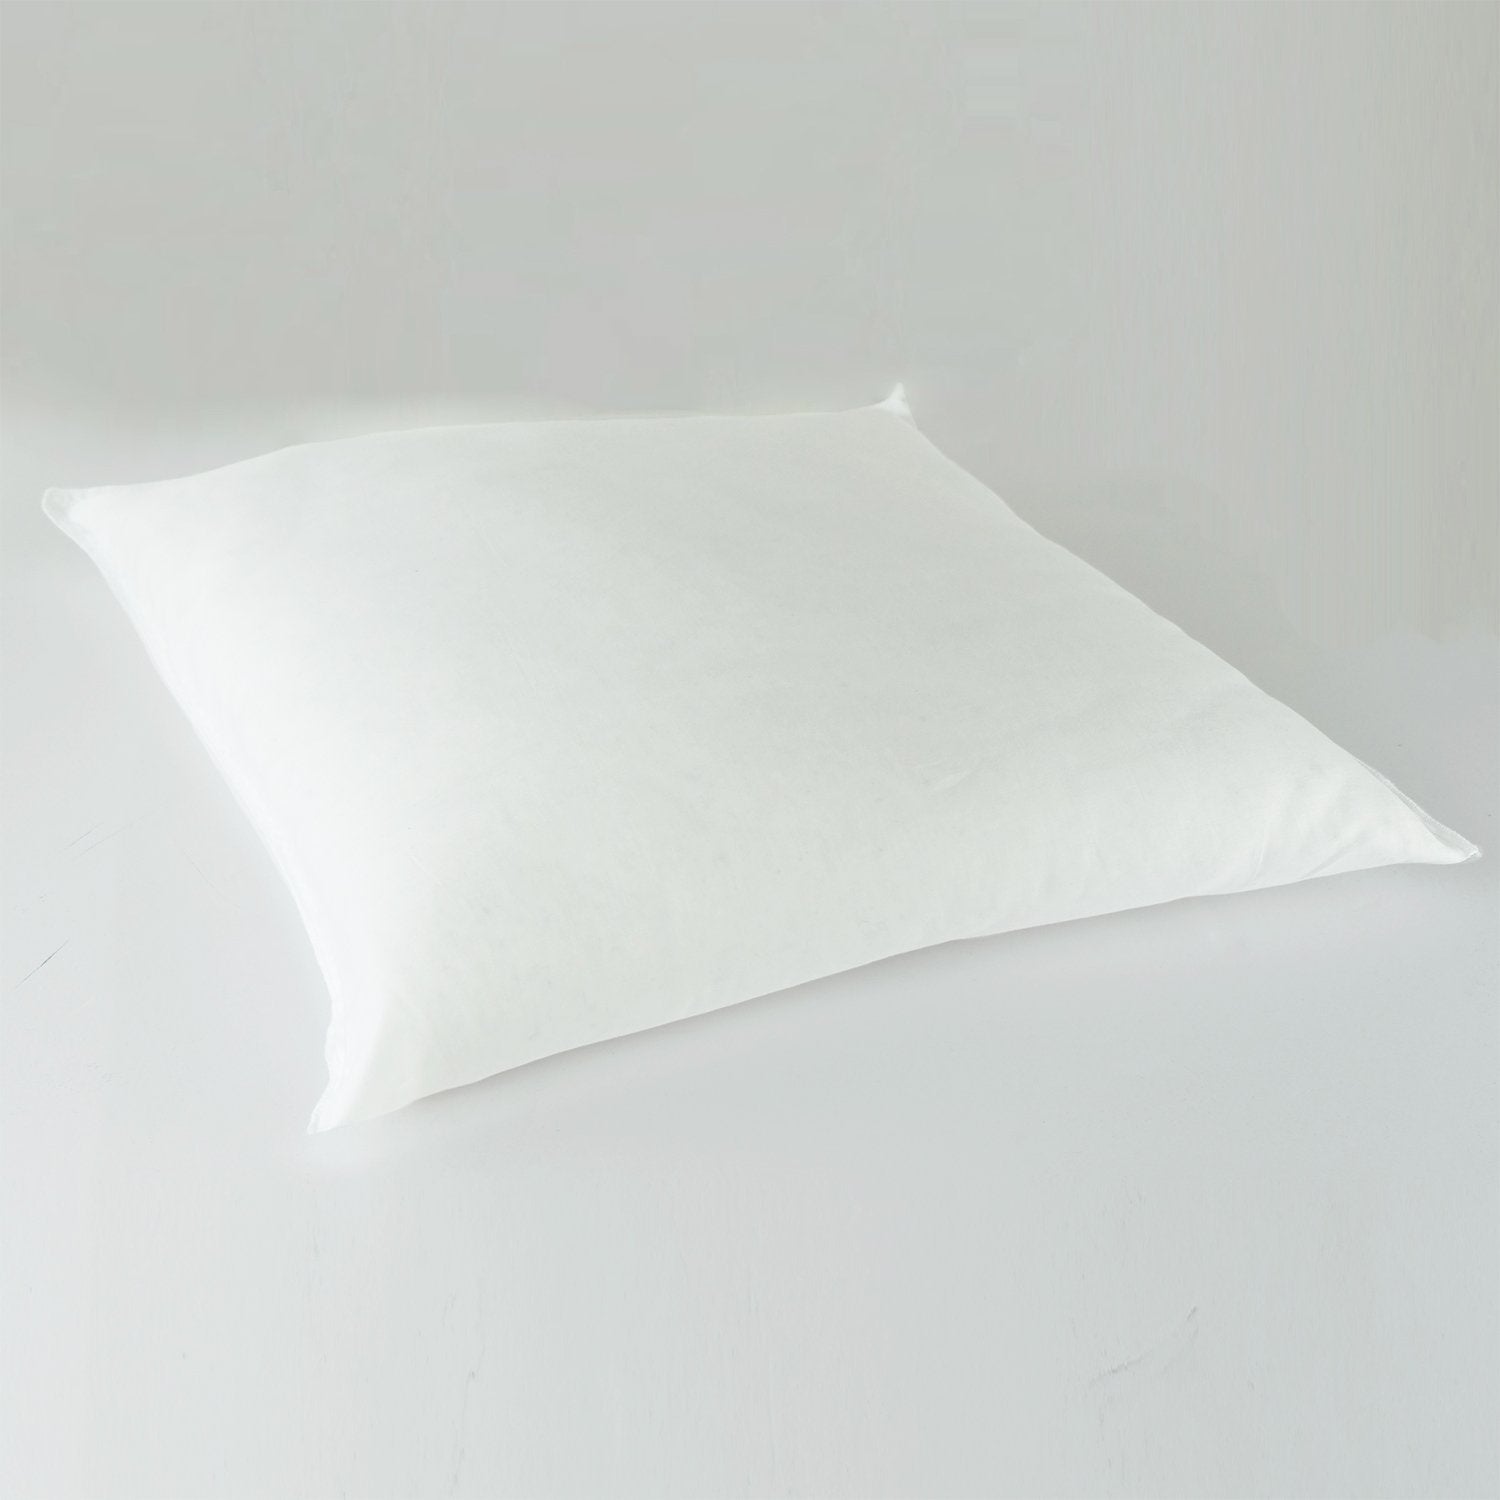 J-Life Tombo Blue #2 Zabuton Floor Pillow_Pillows & Shams_Zabuton Floor Pillows_100% Cotton_Reversible